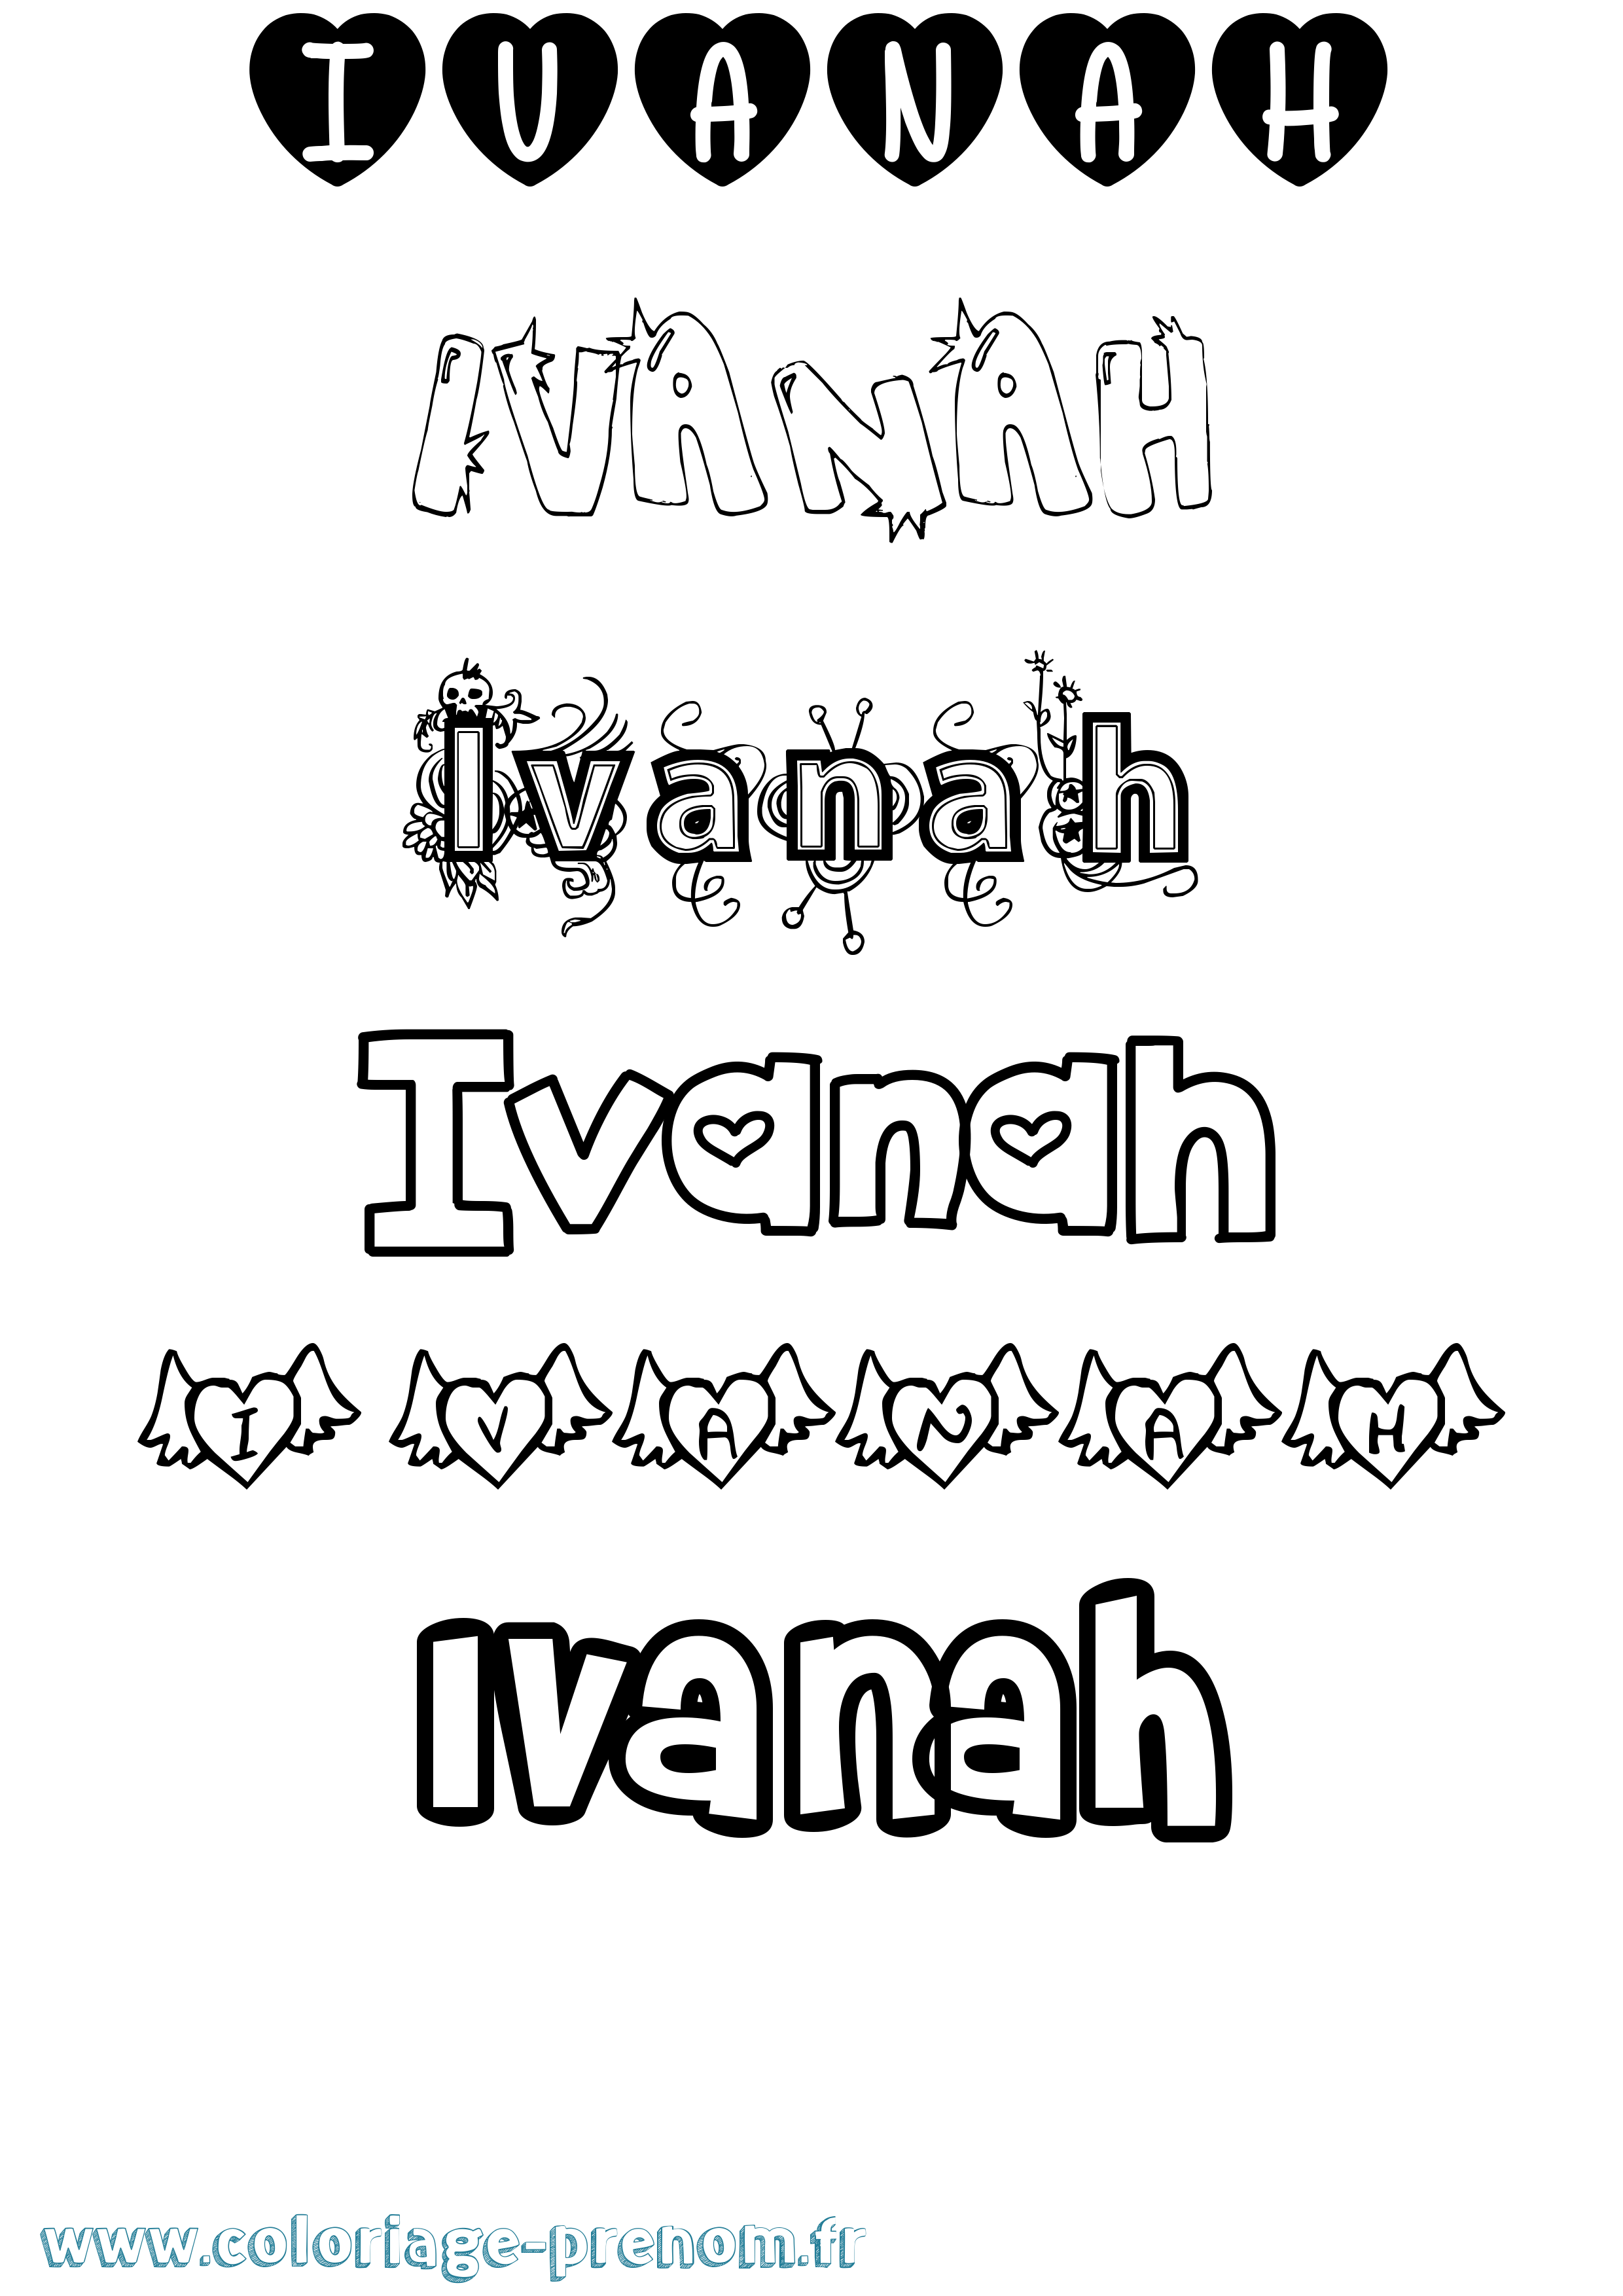 Coloriage prénom Ivanah Girly